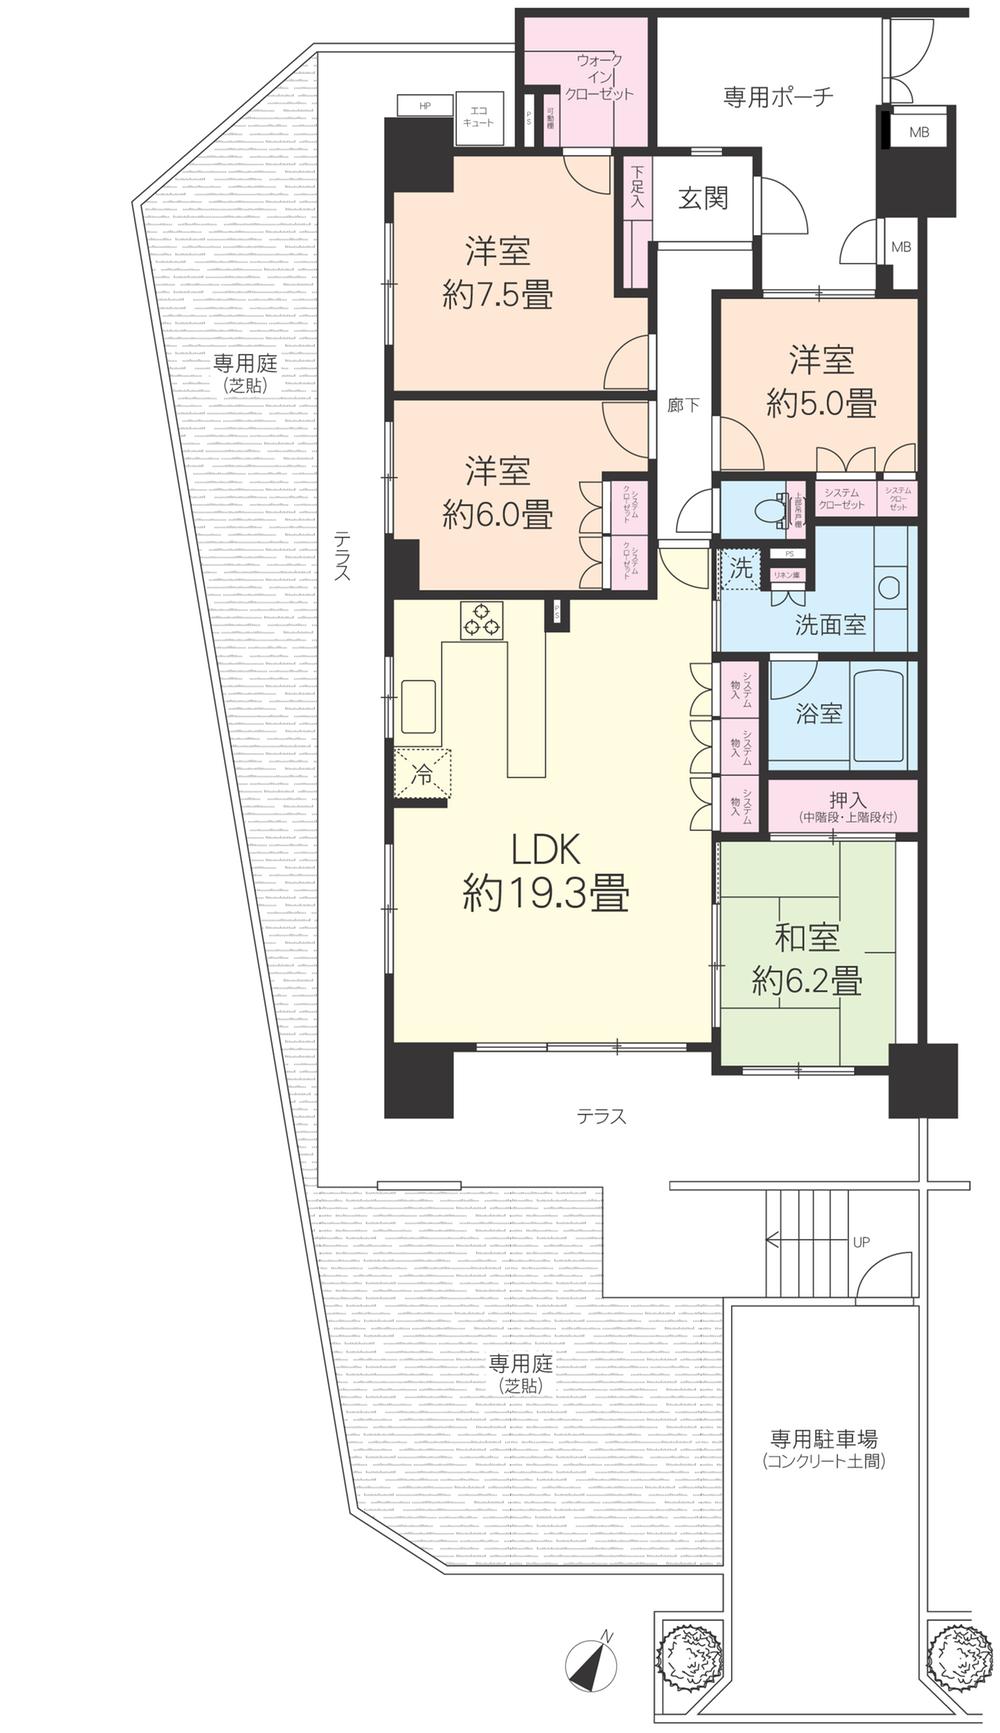 Floor plan. 4LDK, Price 20,900,000 yen, Footprint 100 sq m